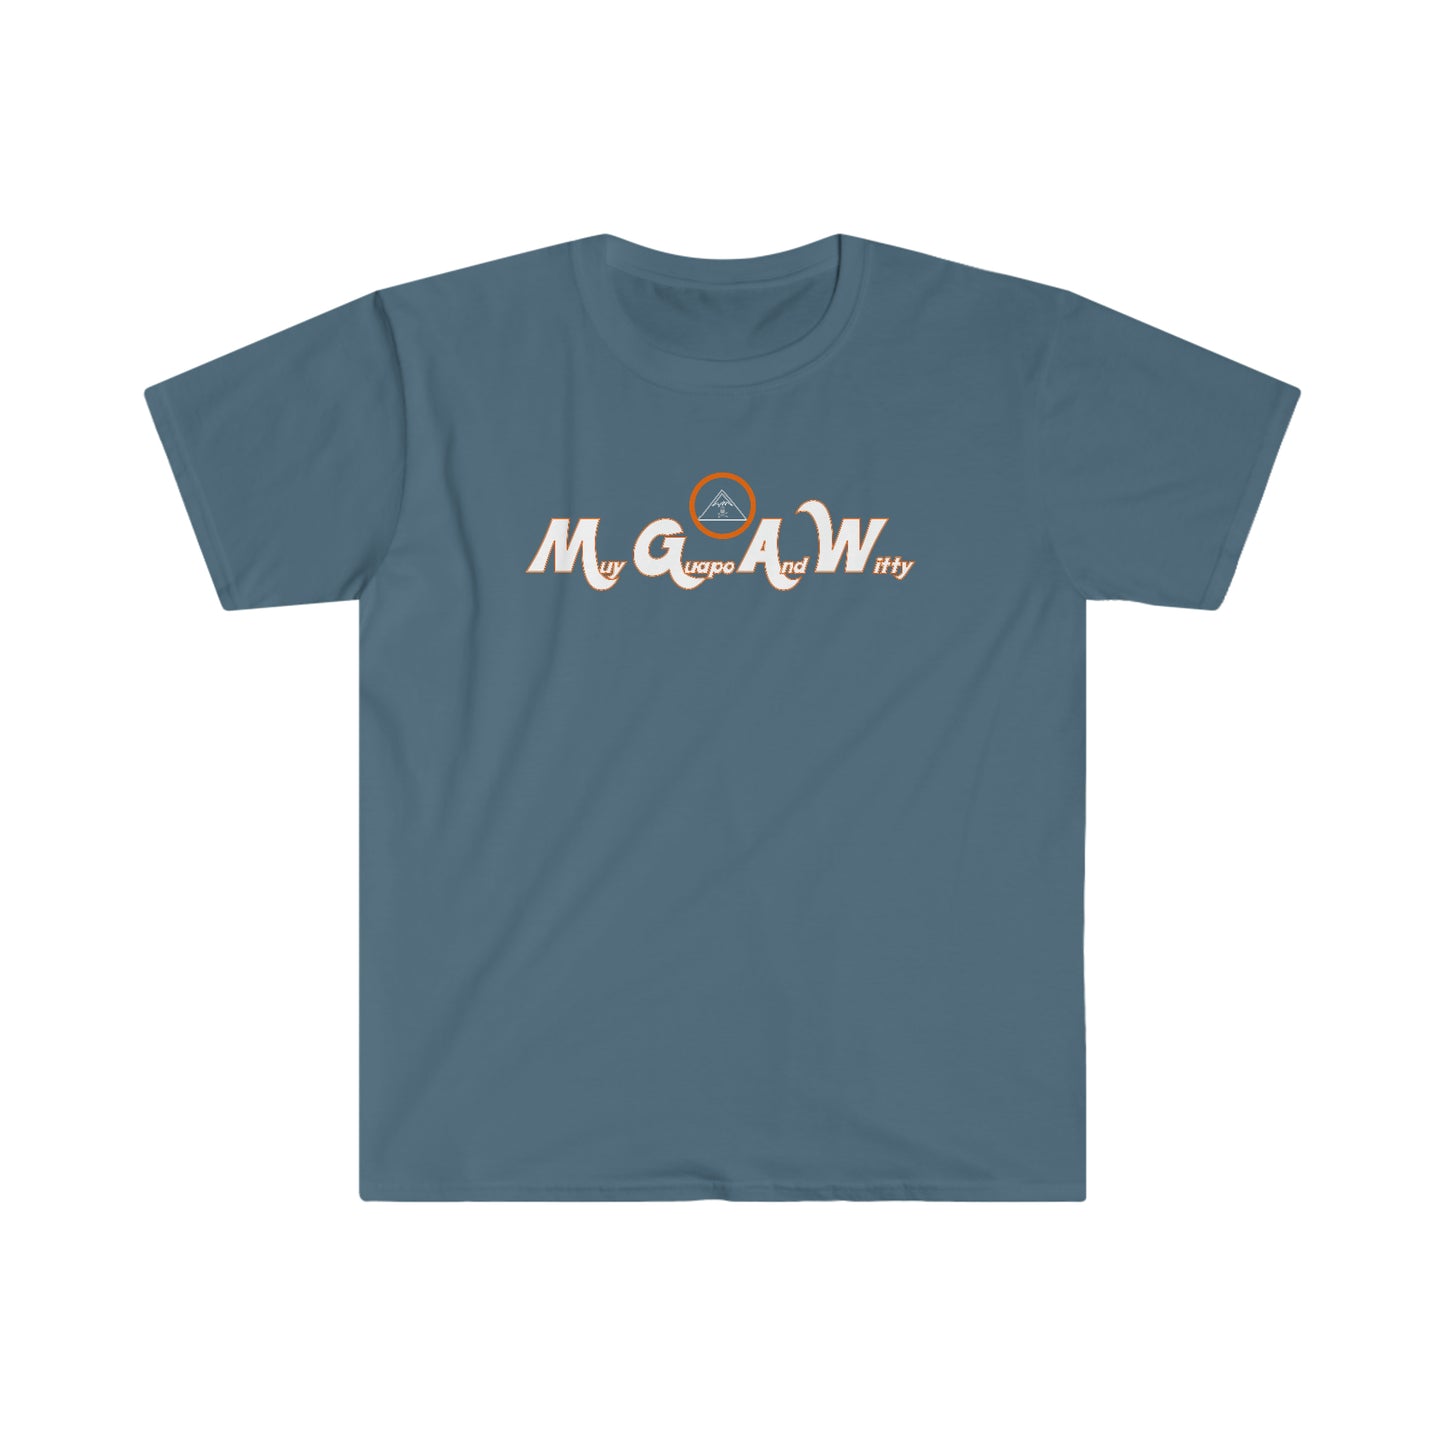 Muy Guapo And Witty – MGAW - T-Shirt